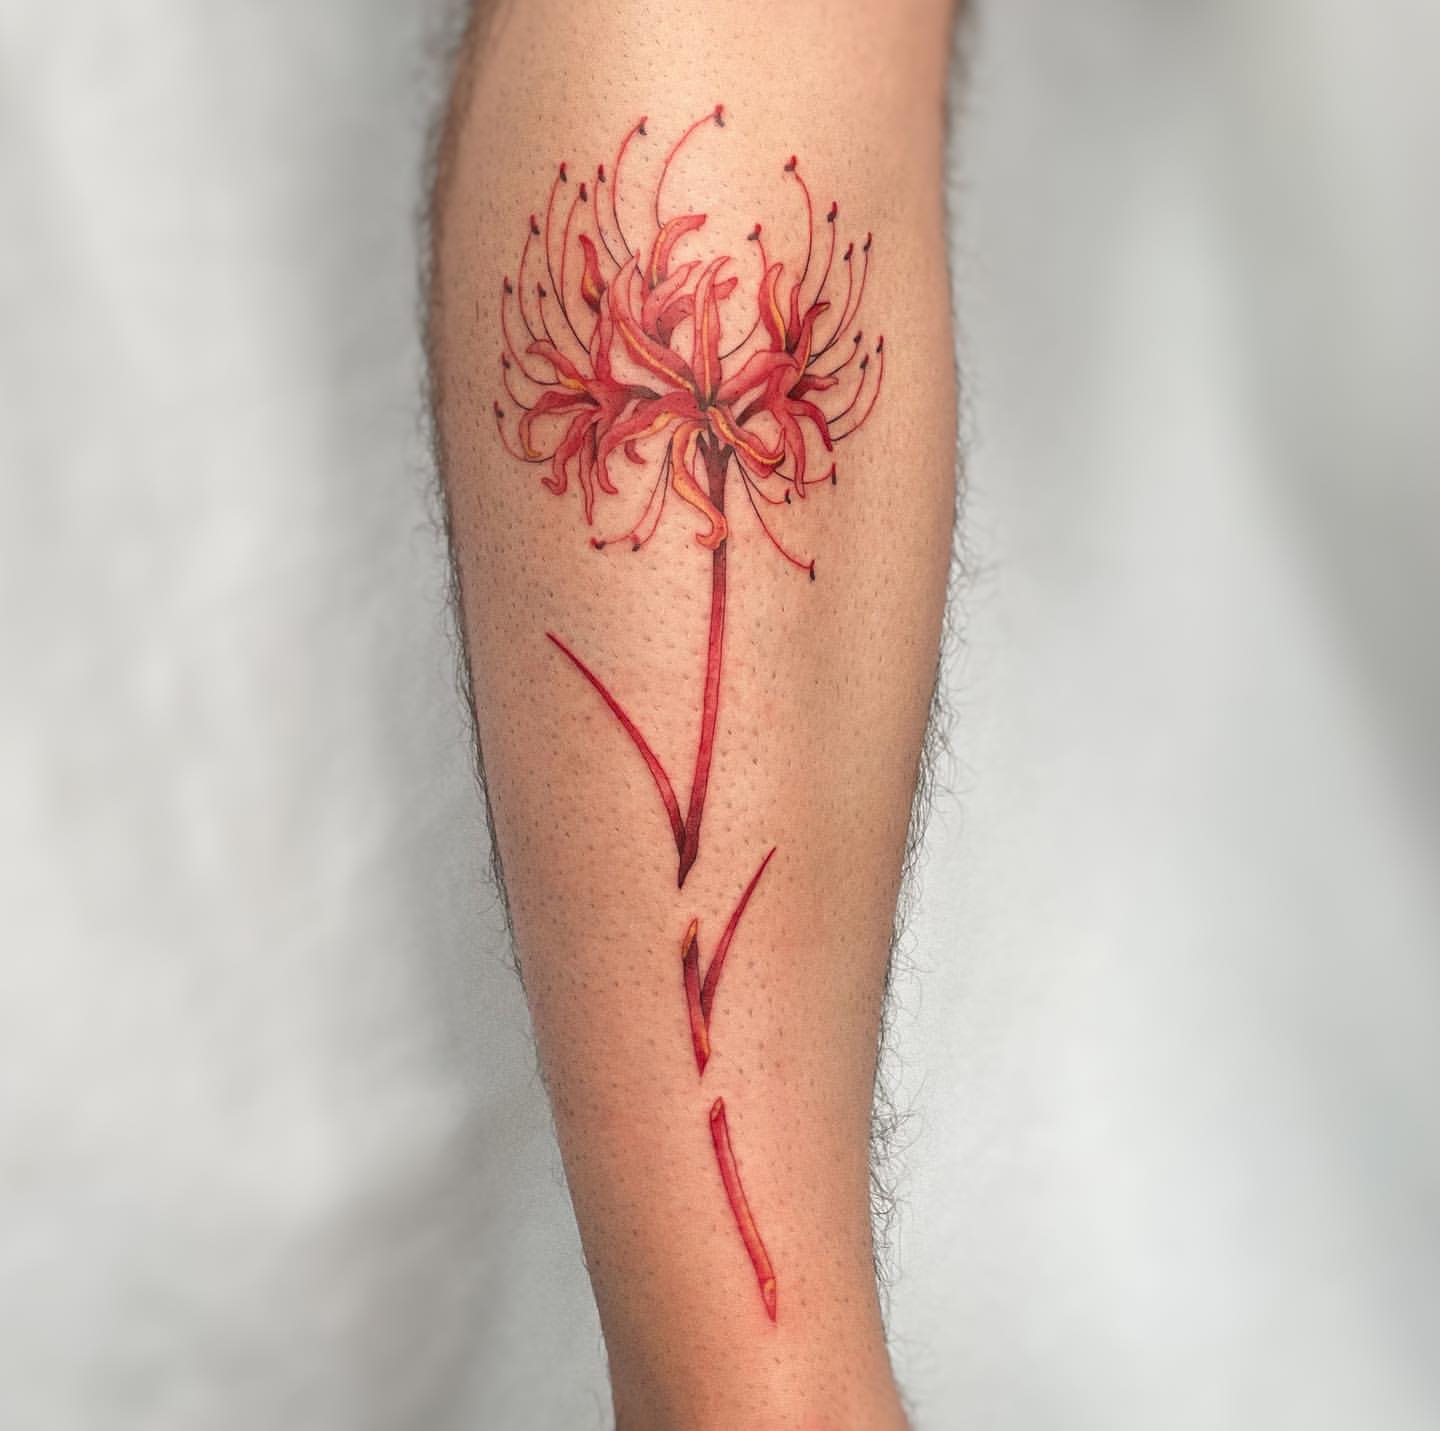 Spider Lily Tattoo Ideas 22